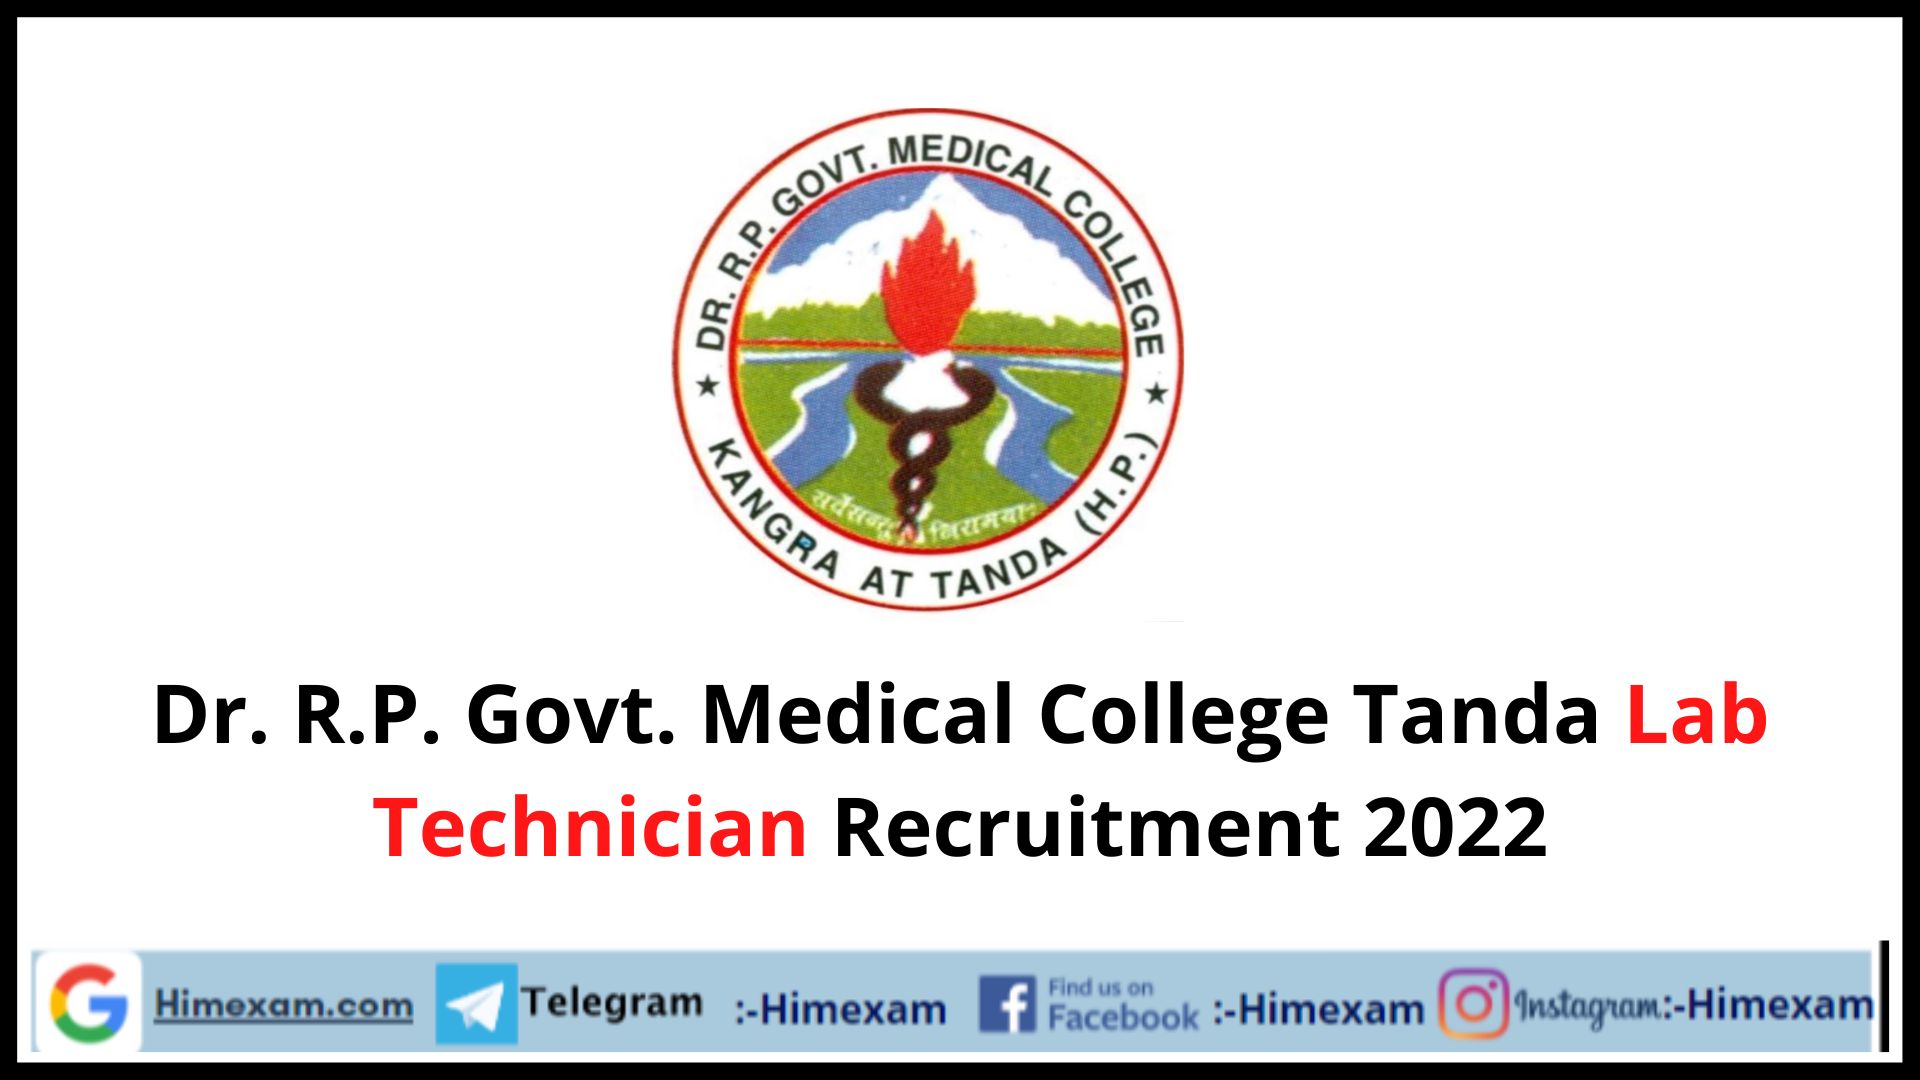 Dr. R.P. Govt. Medical College Lab Technician Recruitment 2022